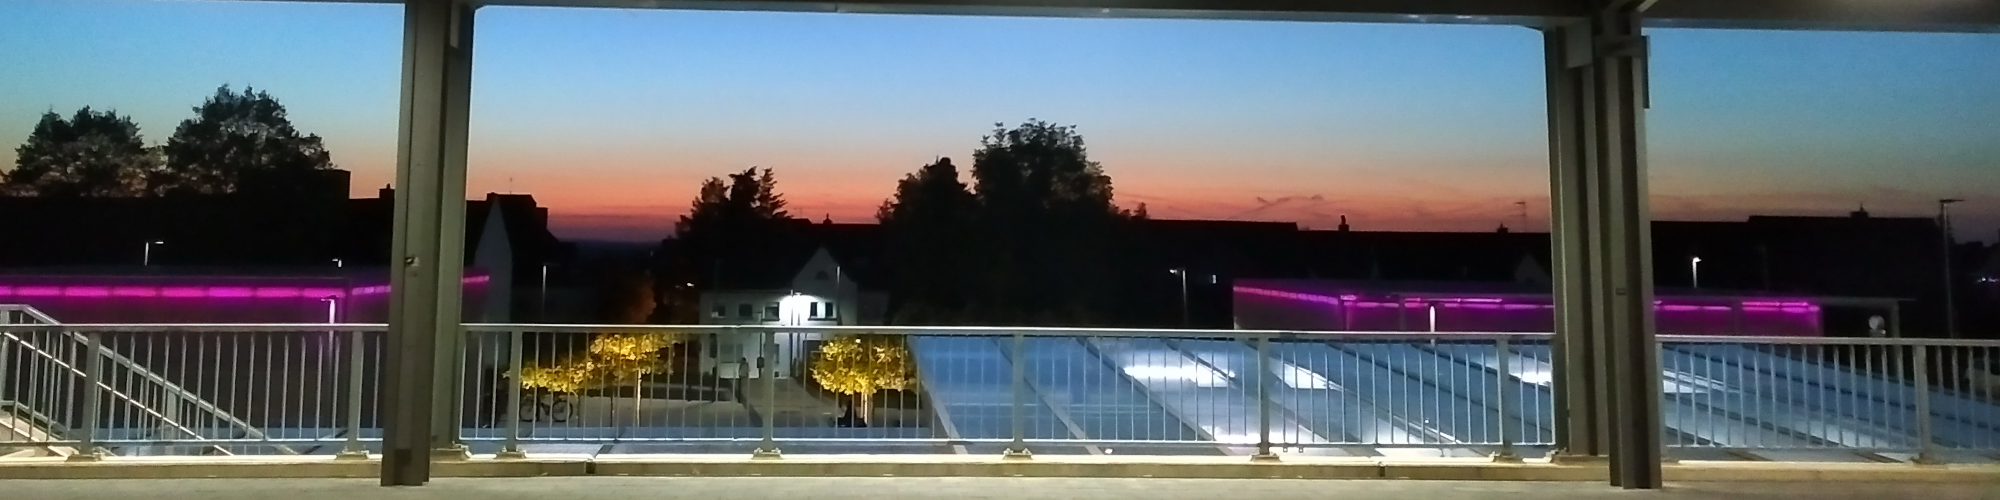 Bahnhof am Abend in Blick-Richtung Liblar